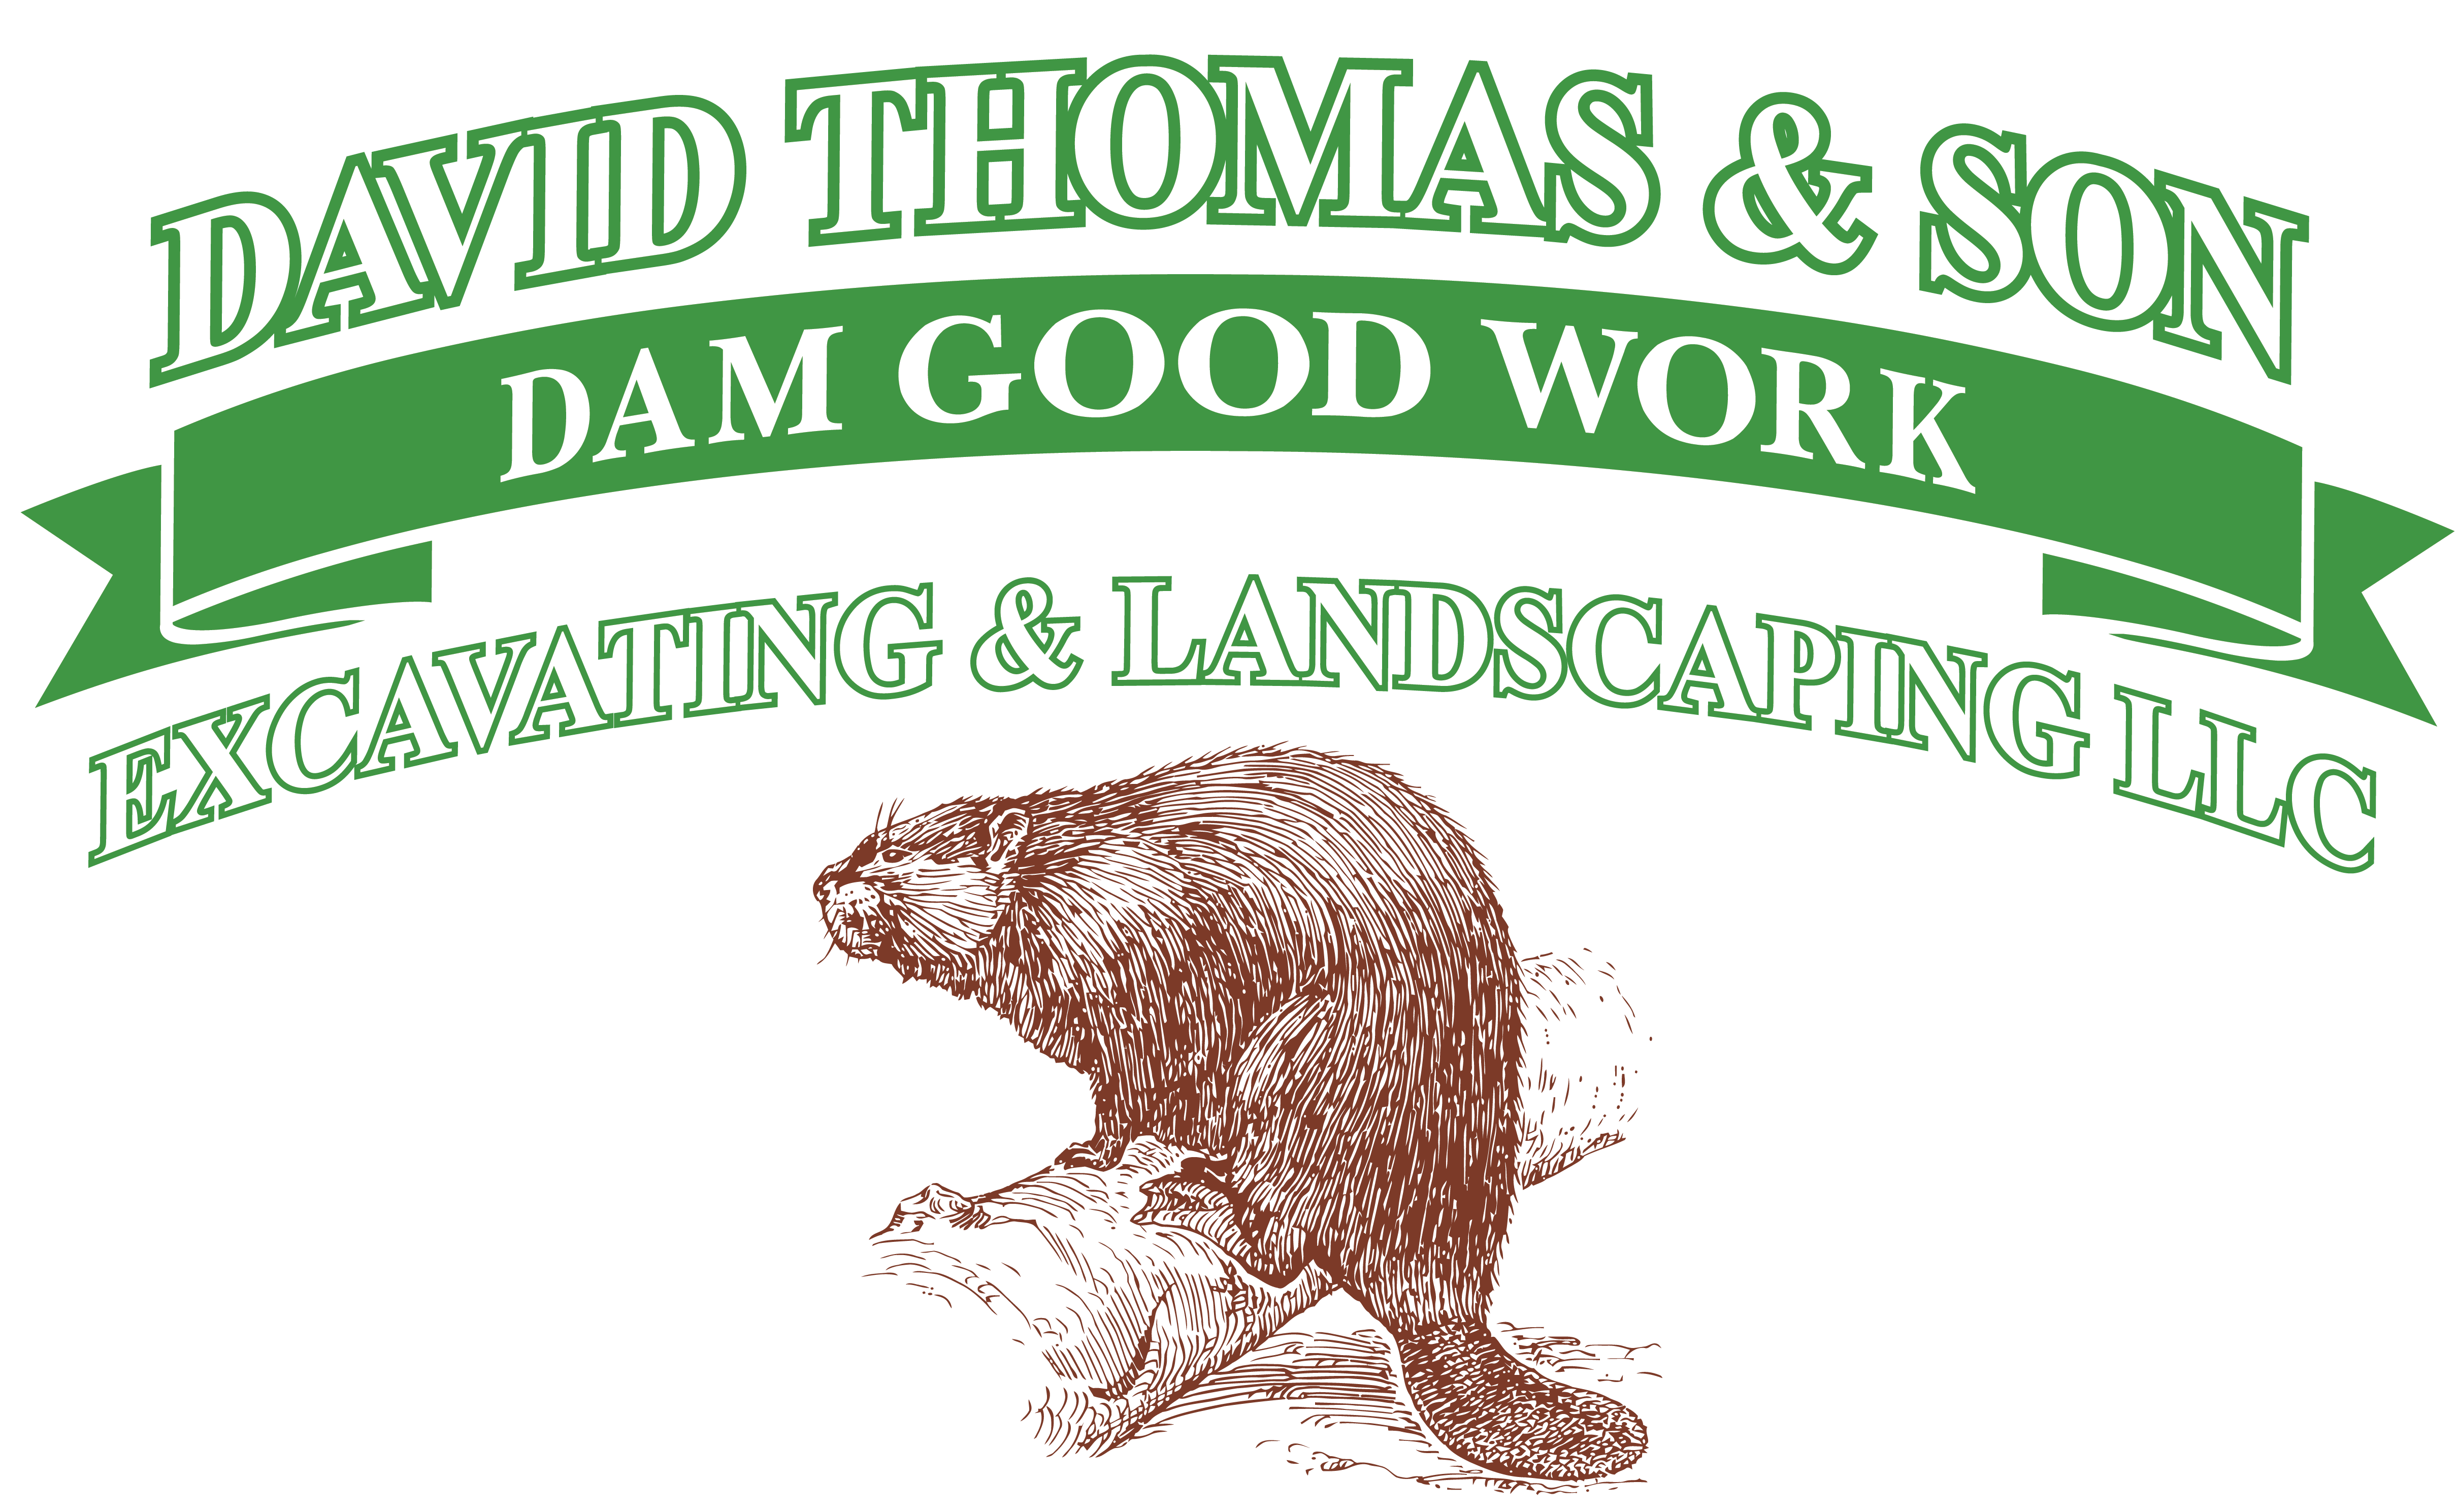 David Thomas & Son Excavating & Landscaping, LLC